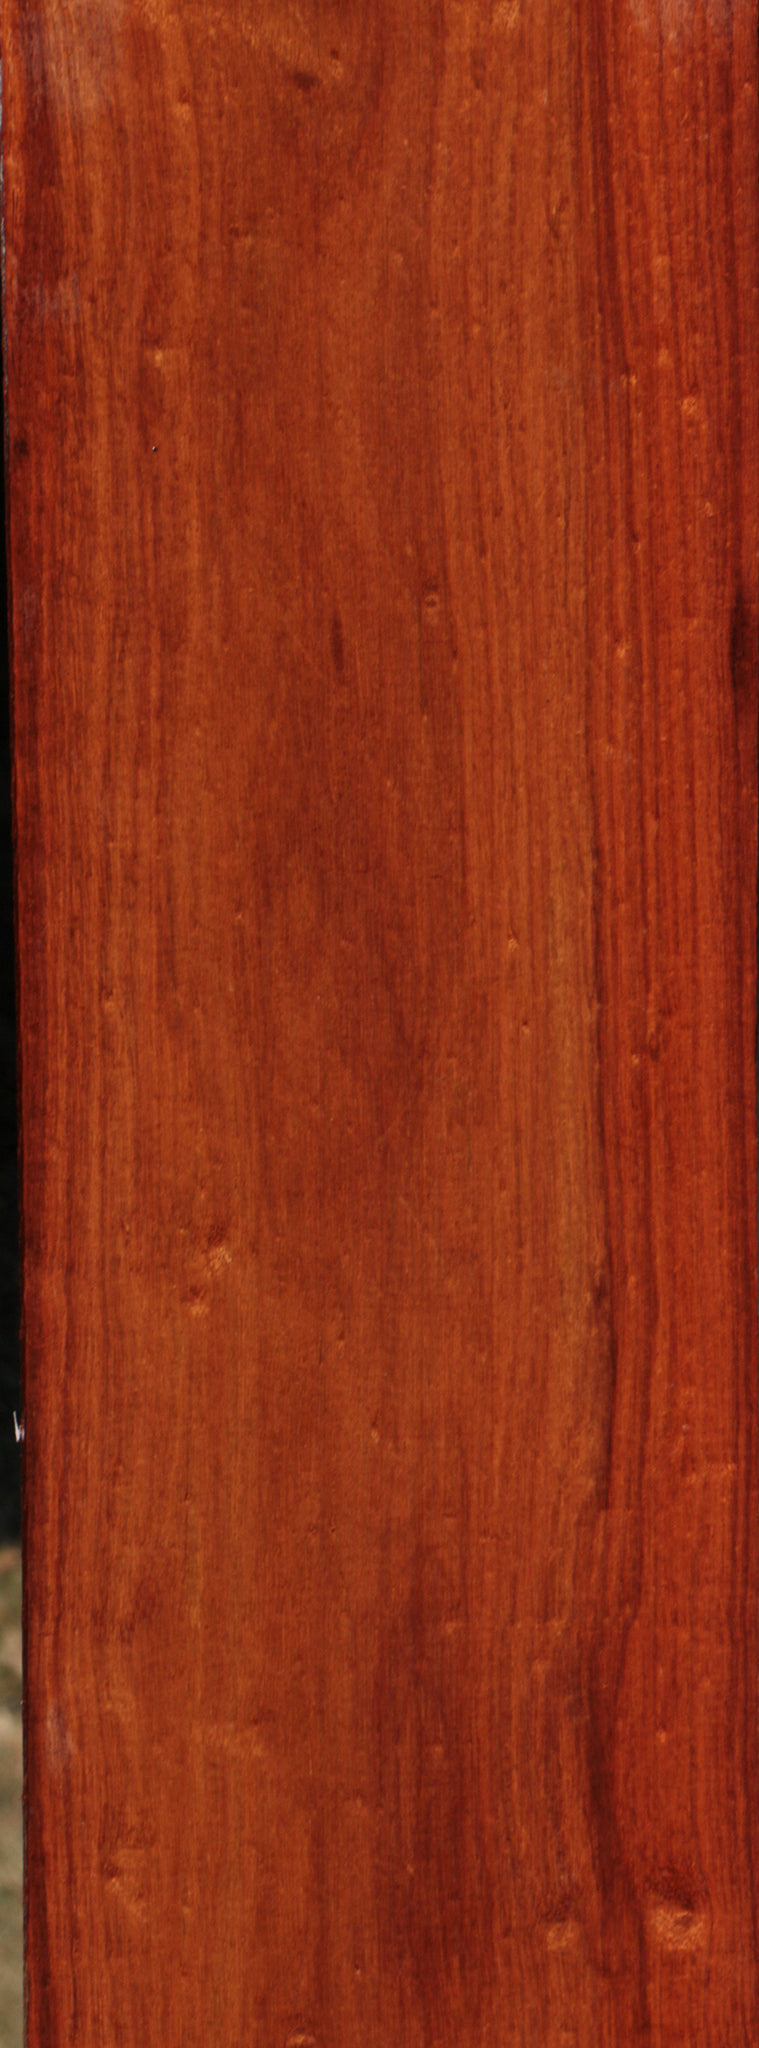 Granadillo Lumber